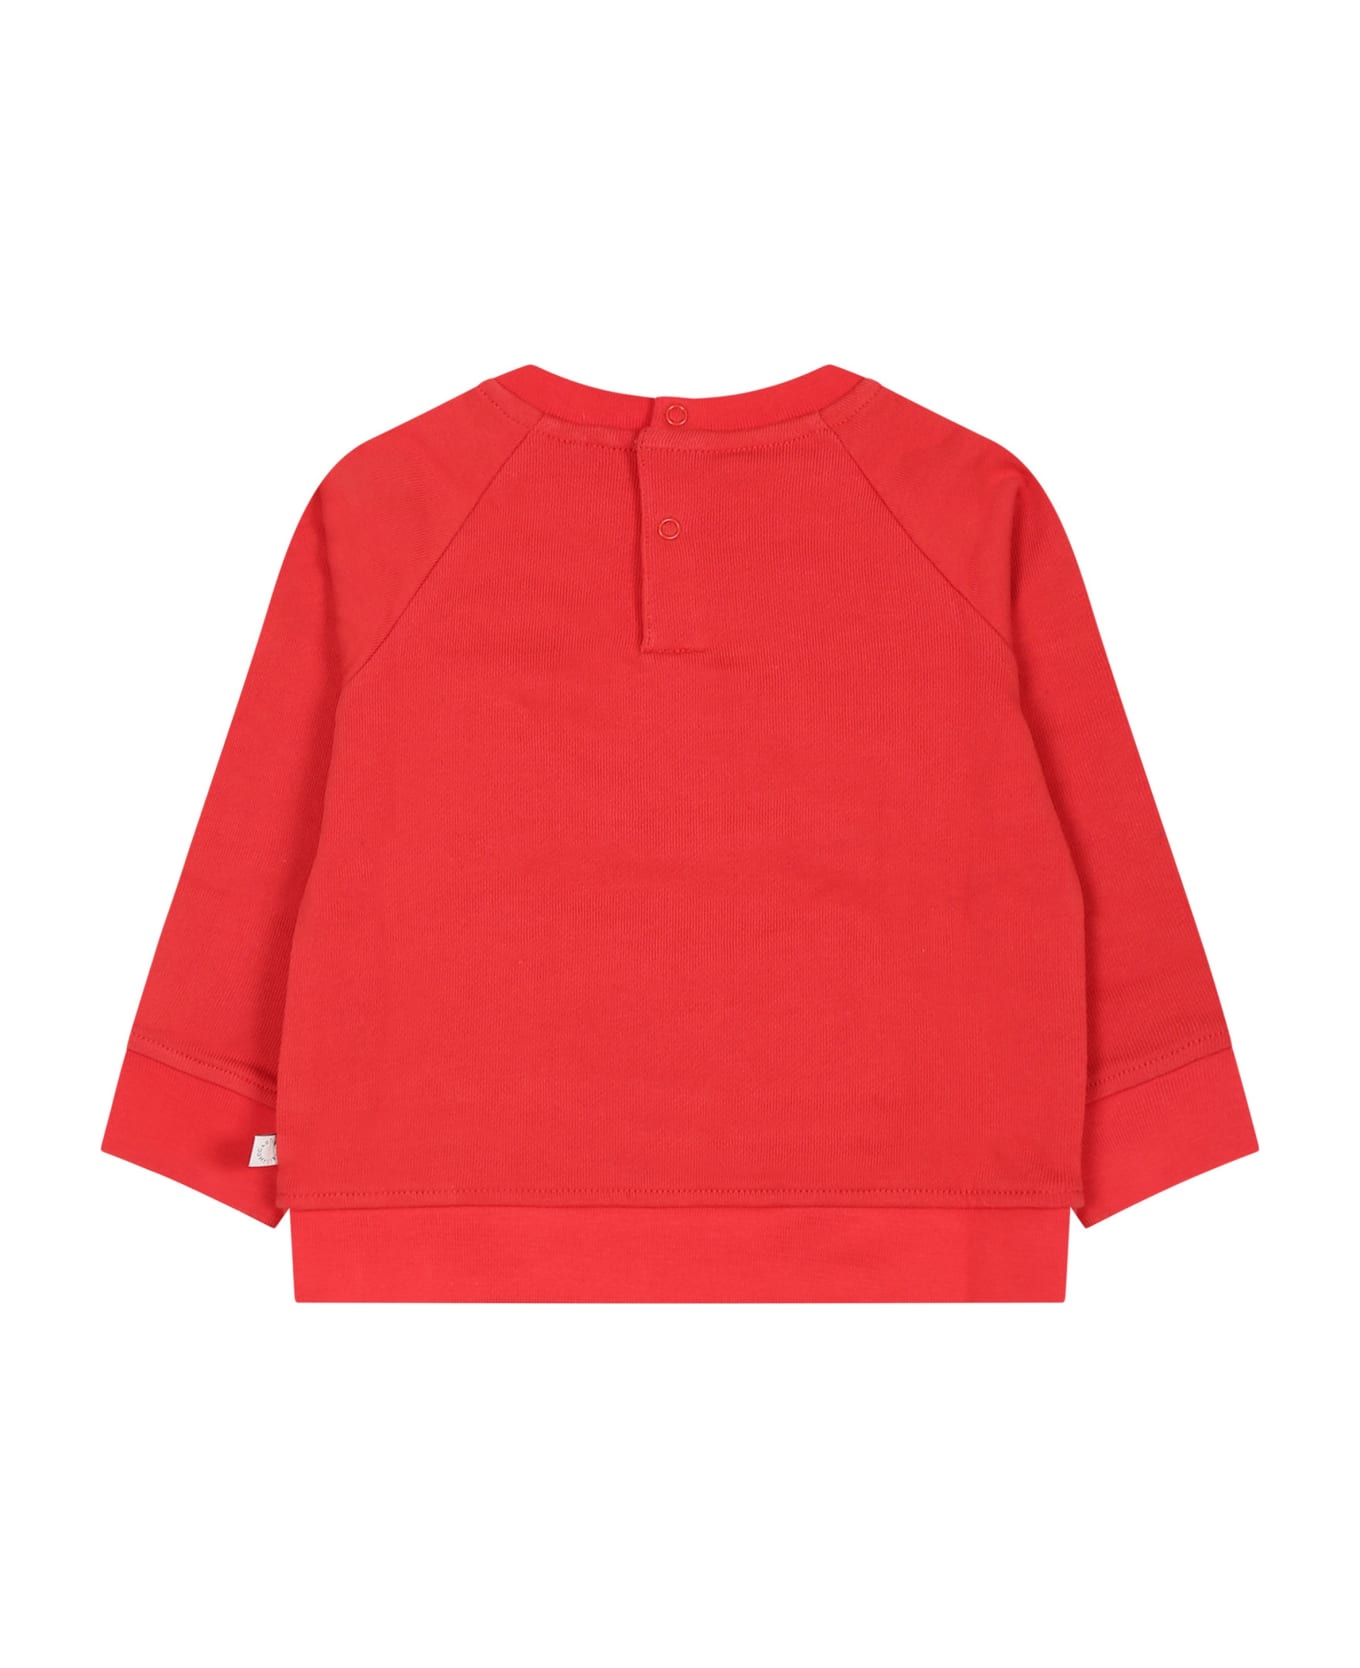 Stella McCartney Kids Red Sweatshirt For Baby Kids With Print - Red